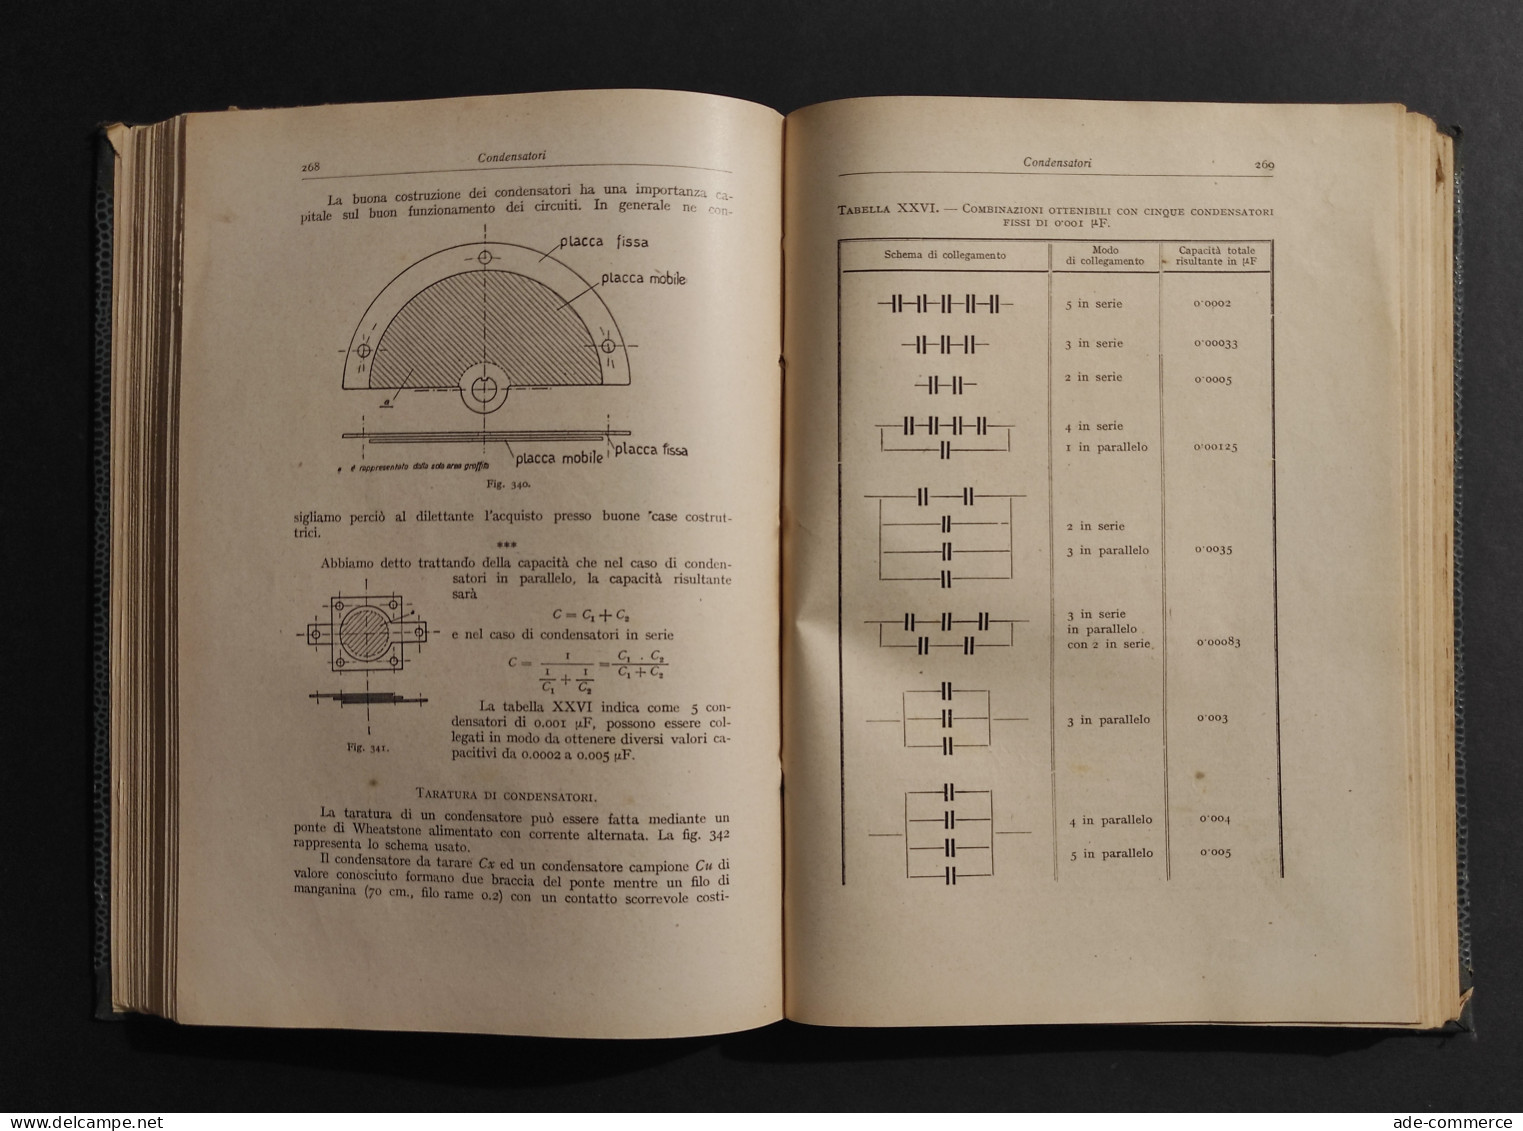 Radio Telegrafica Telefonica - E. Montù - Ed. Hoepli - 1929 - Matemáticas Y Física